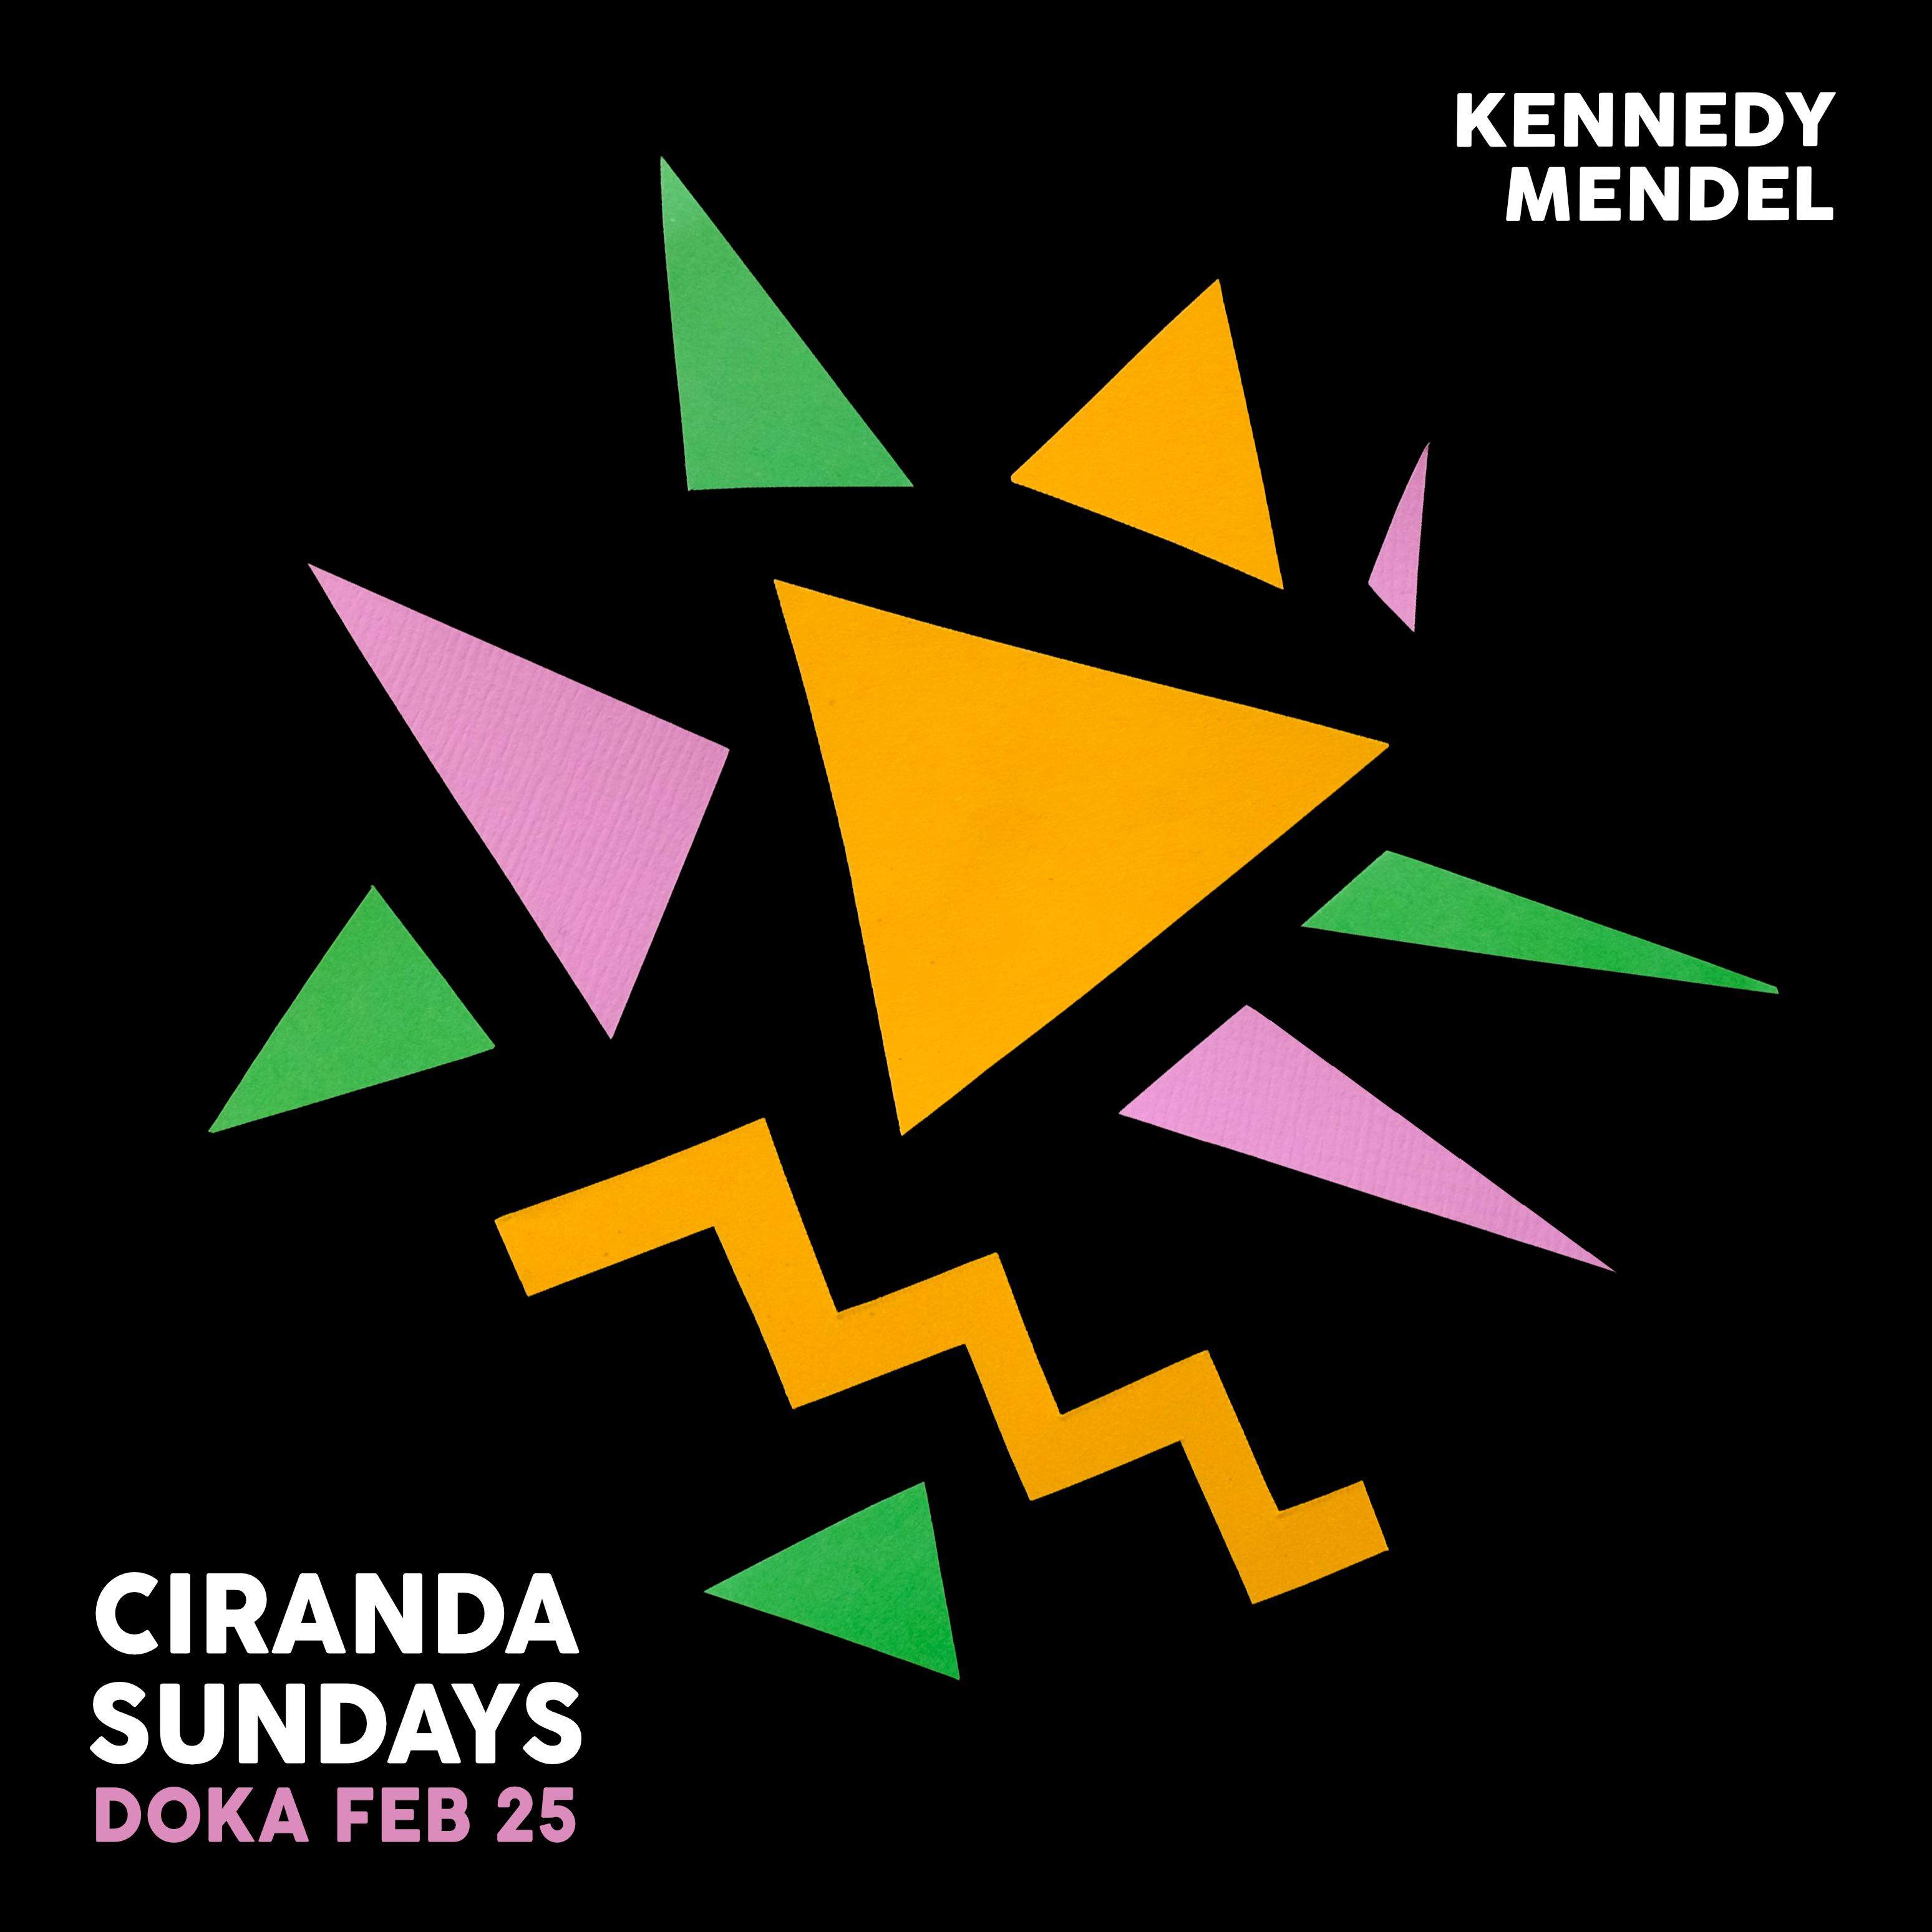 Ciranda Sundays with Kennedy - Mendel - フライヤー表